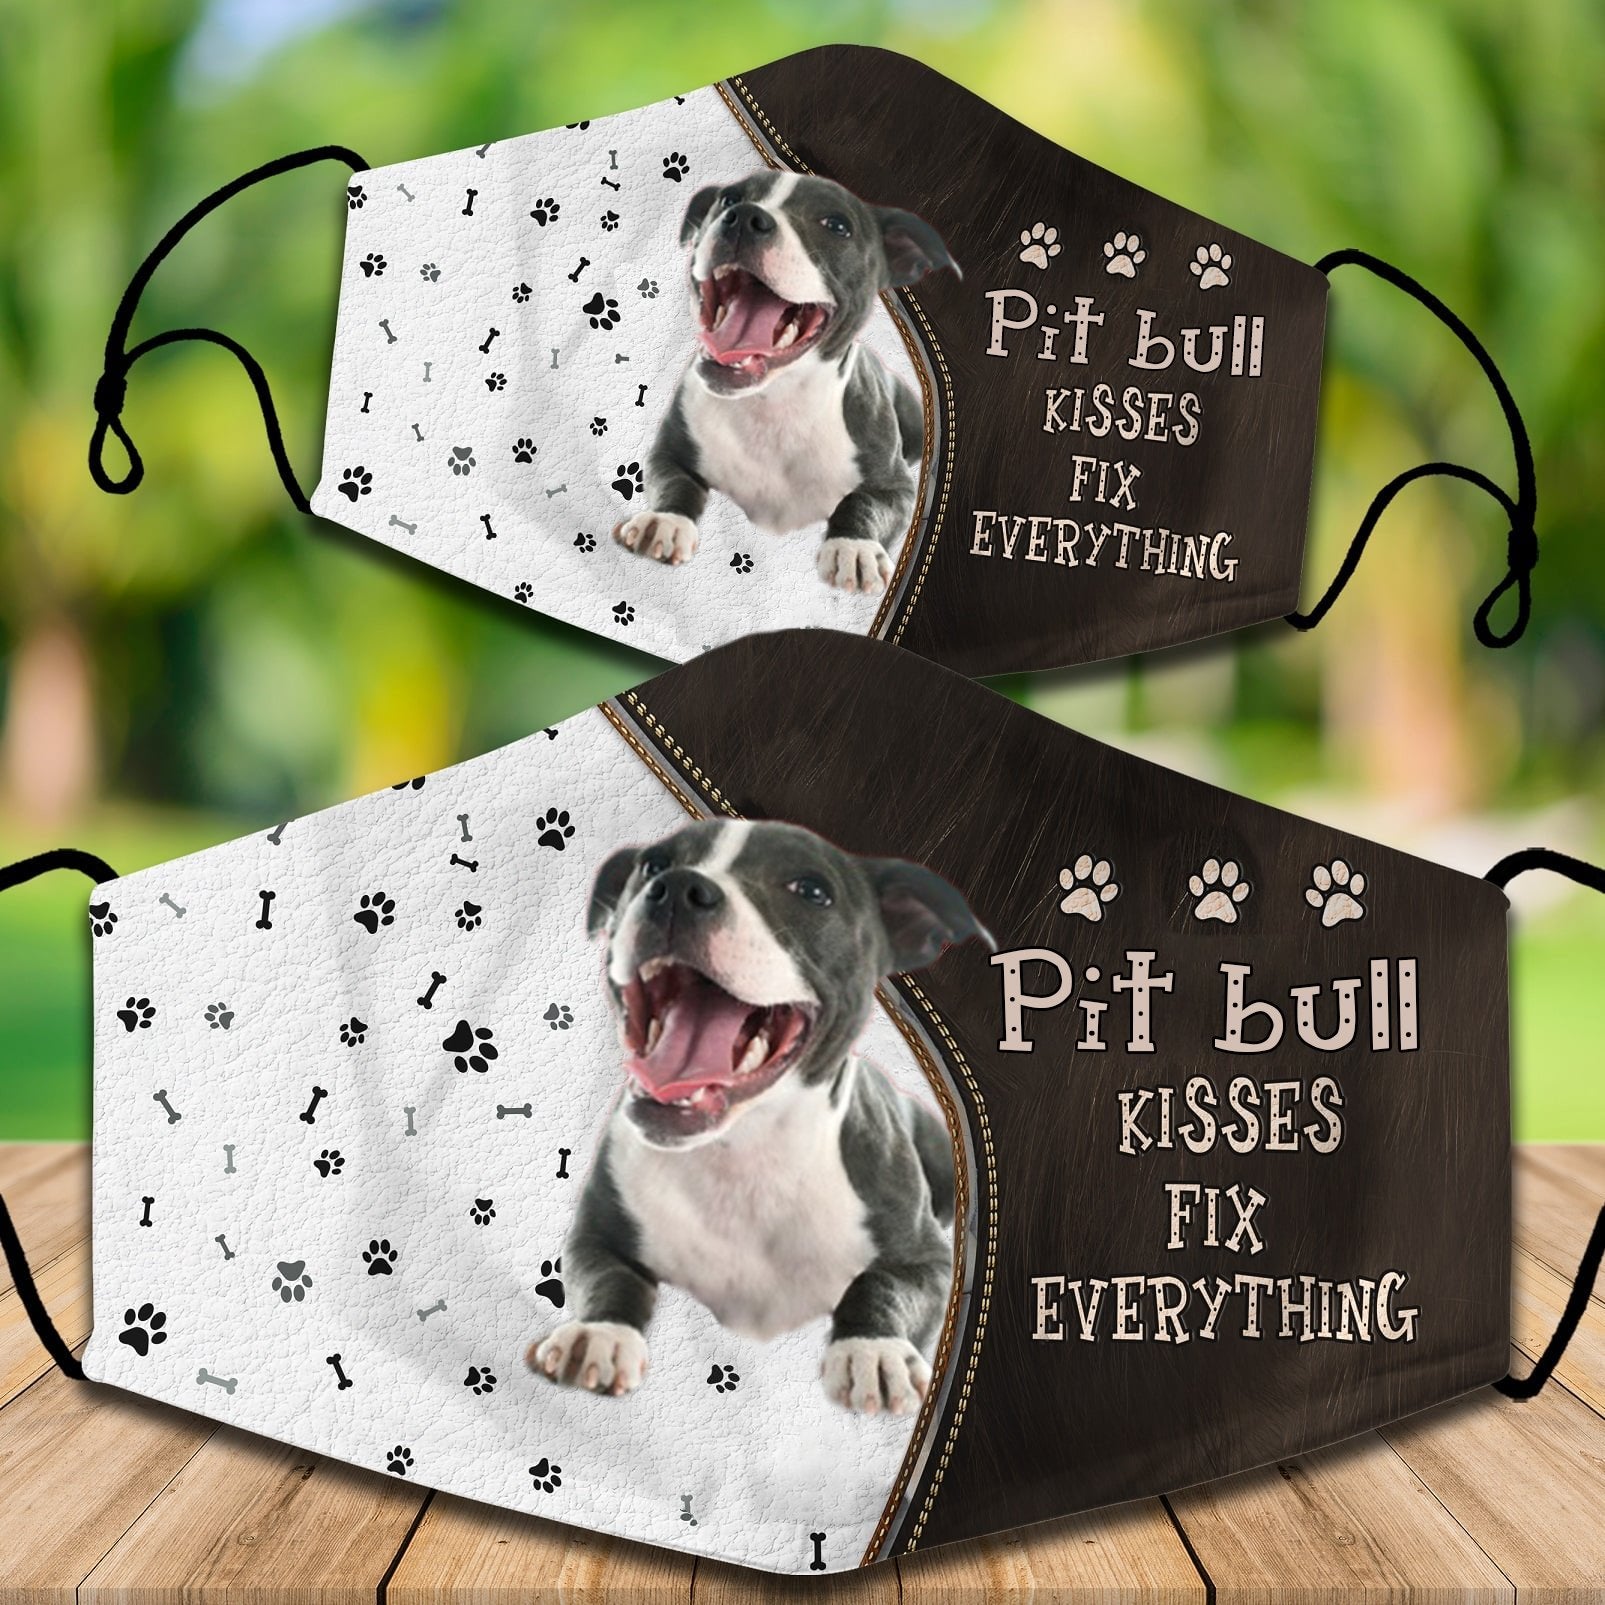 Pit bull3 Kisses Fix Everything Veil